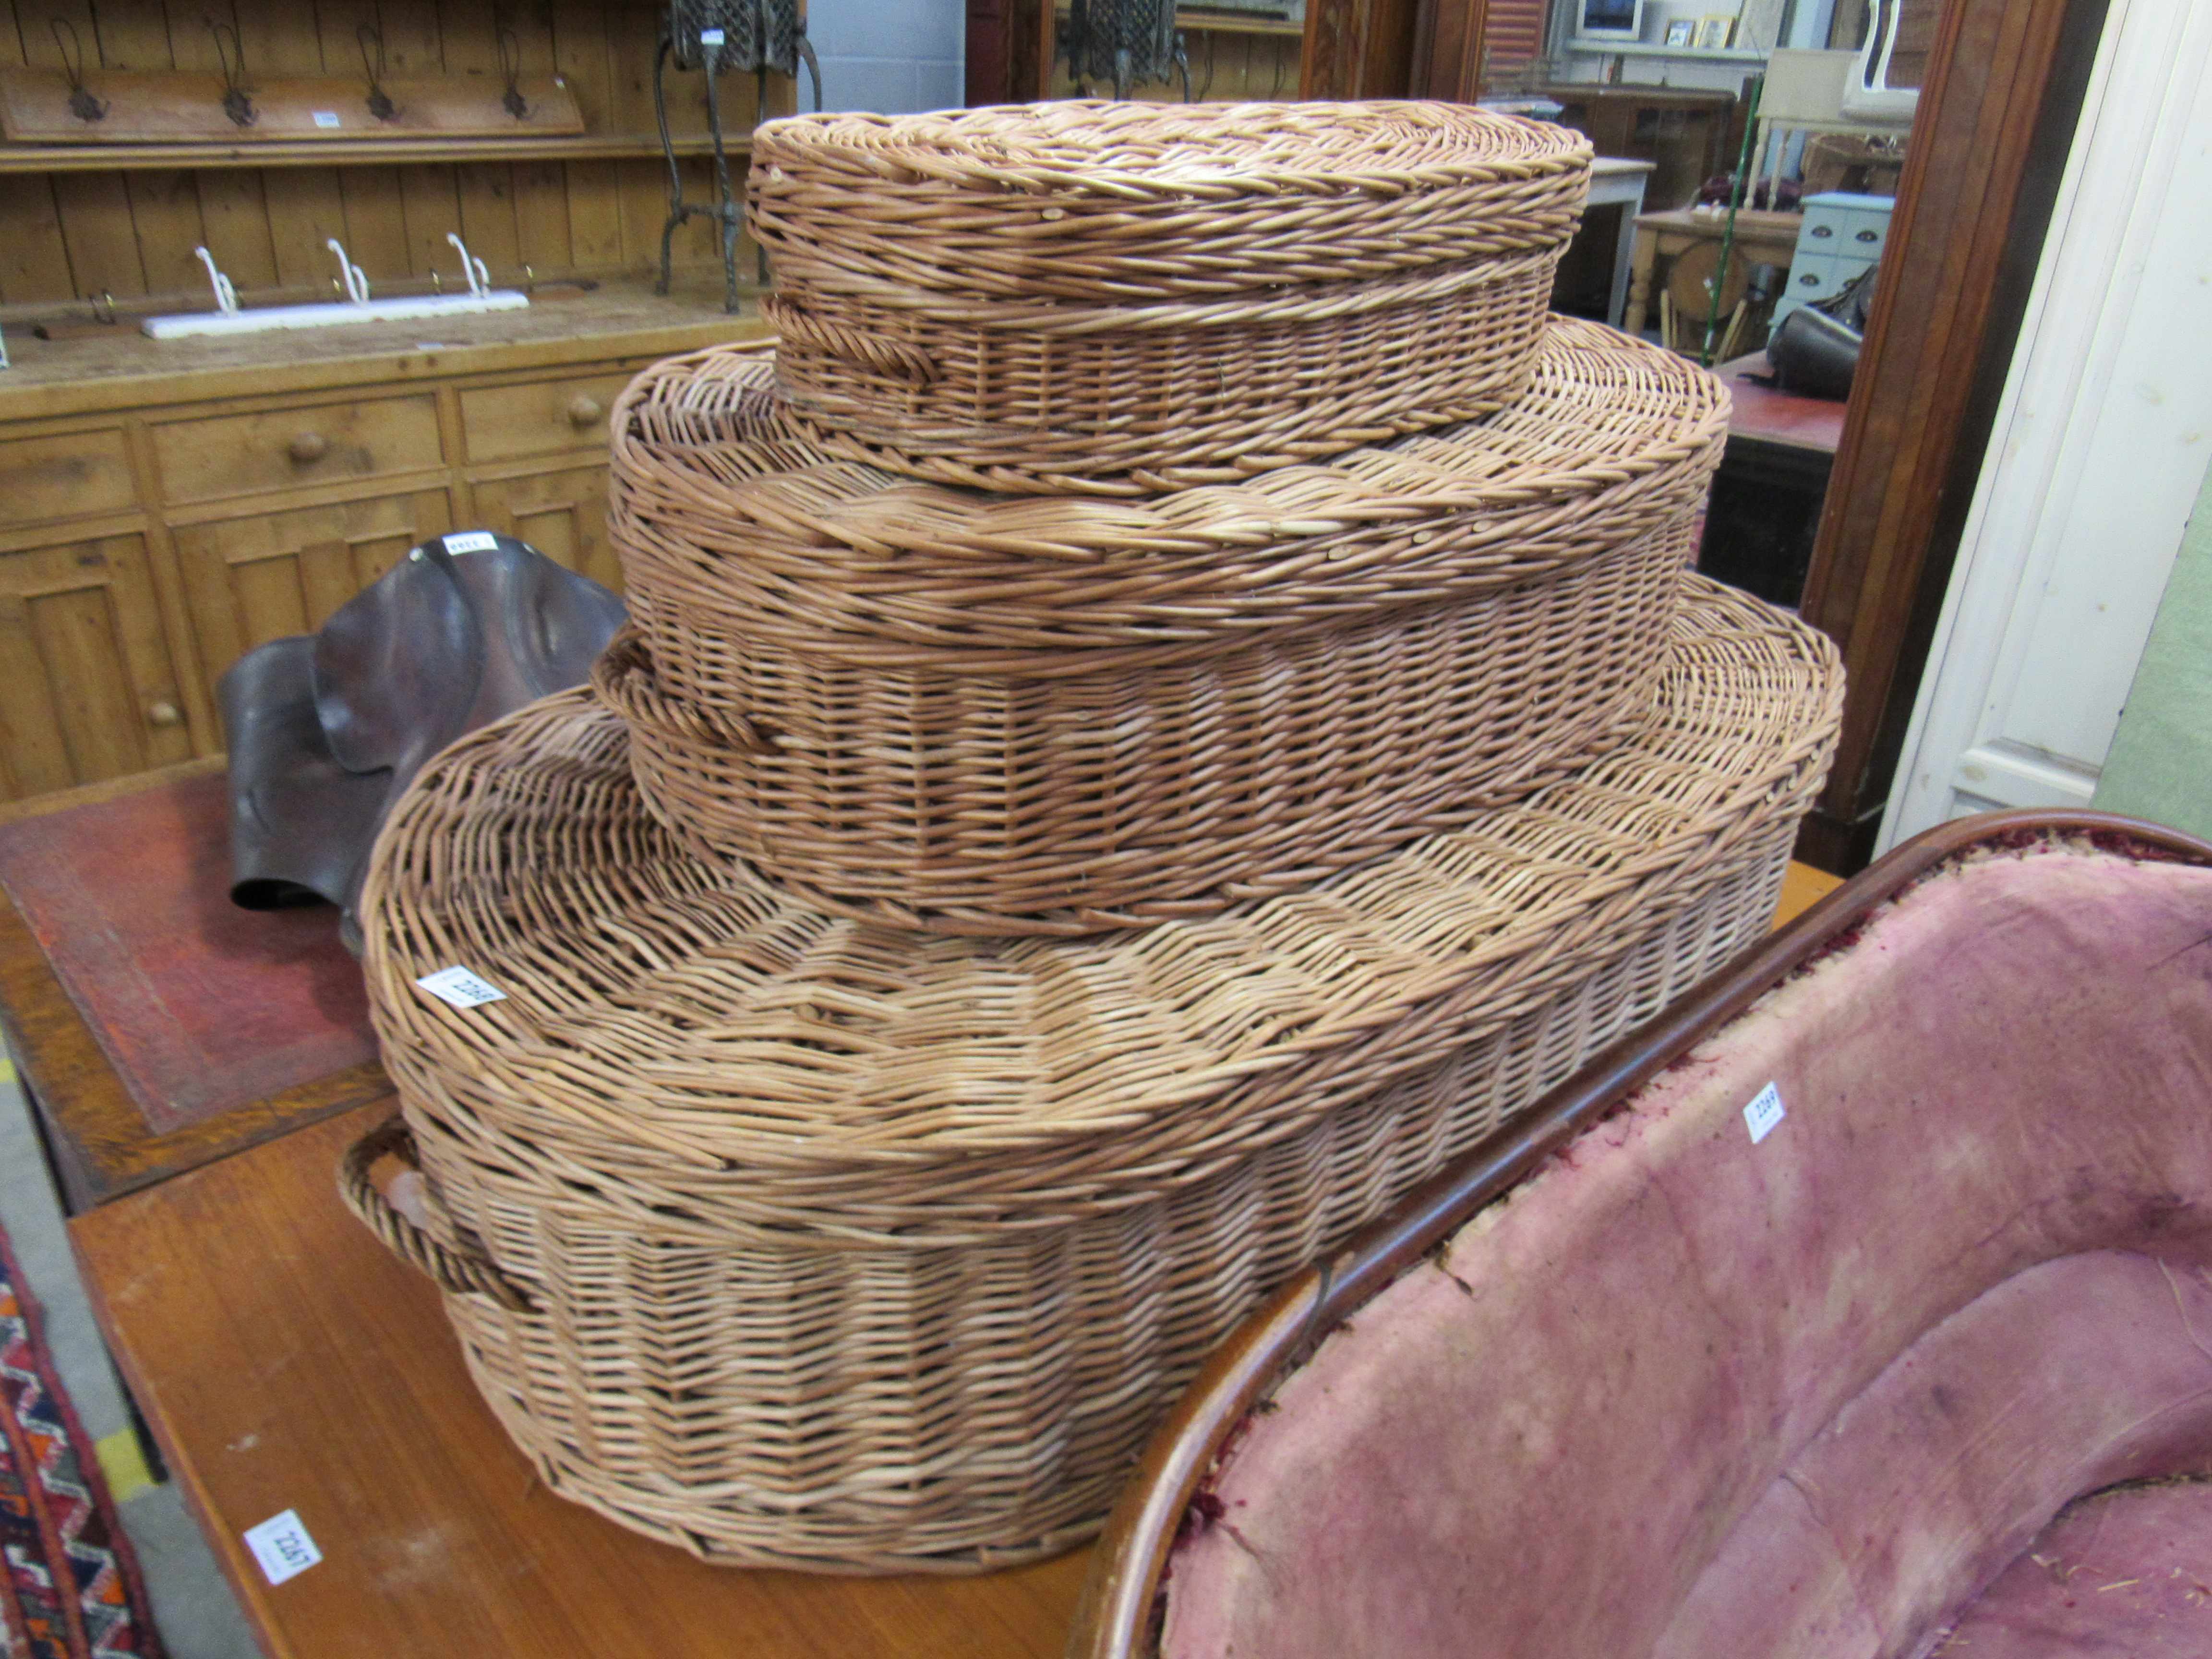 A set of three graduating wicker lidded baskets